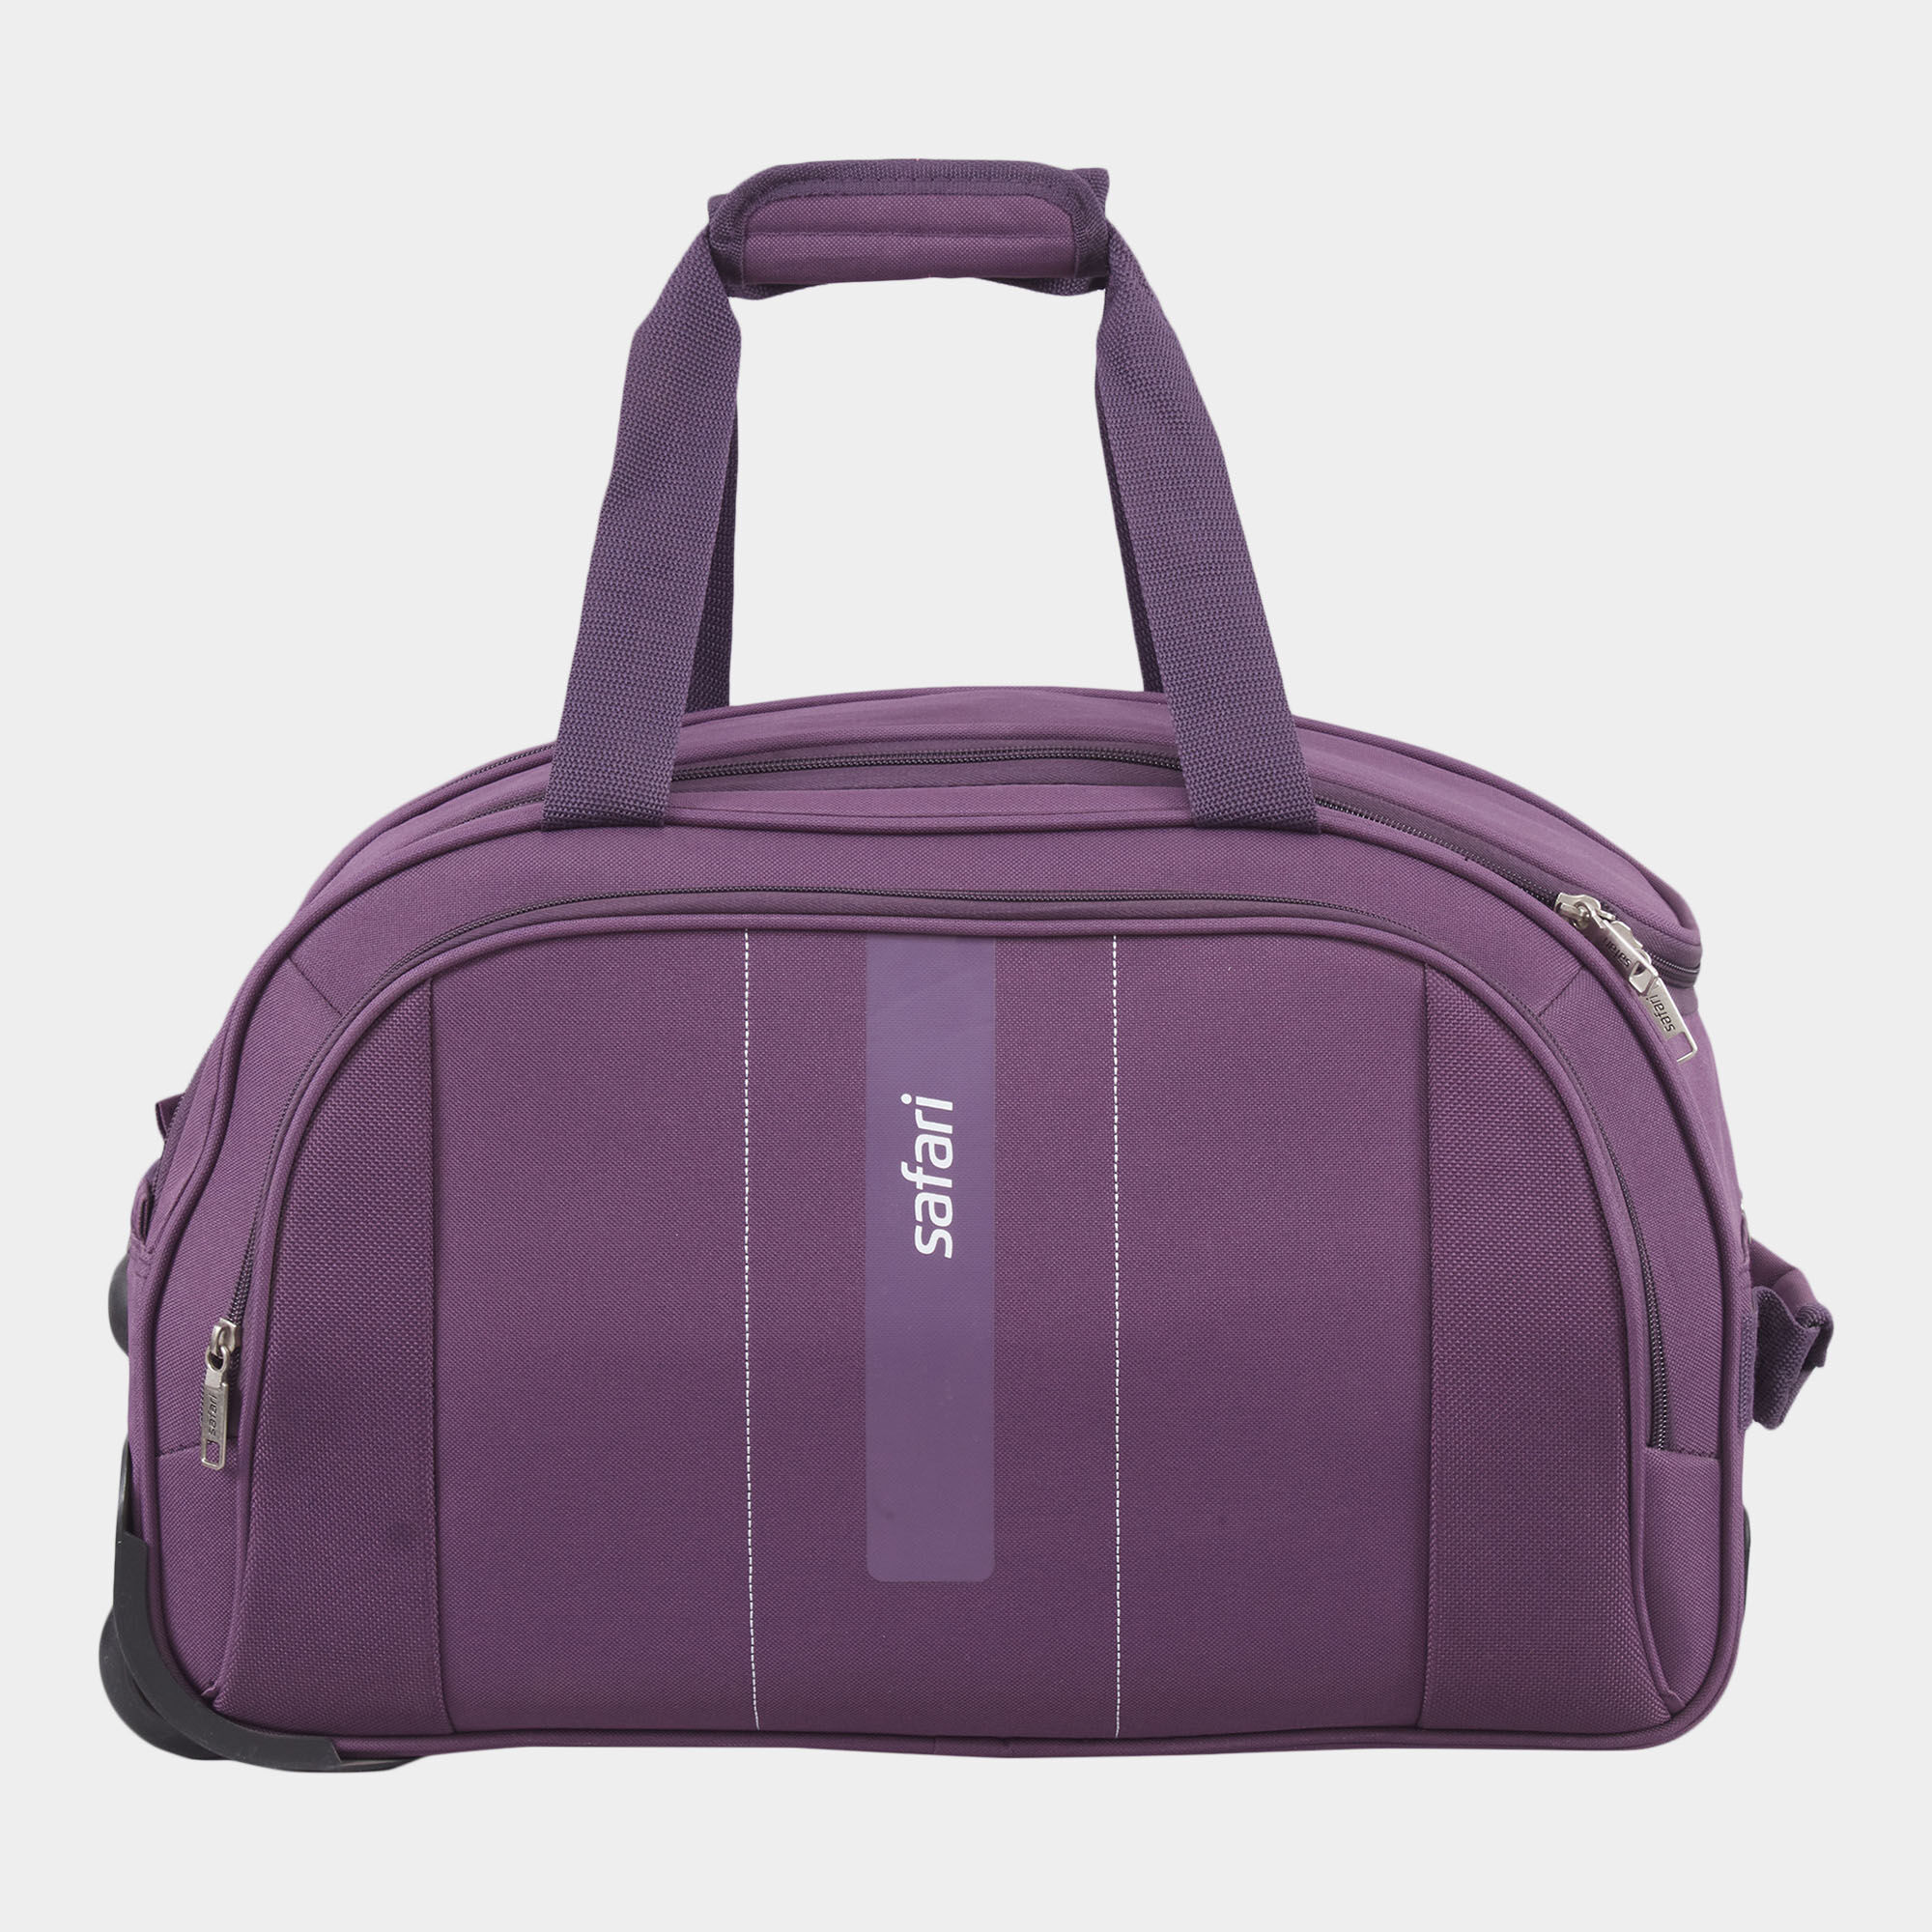 Safari Accord Duffle Bags for Travel 66 cm 2 Wheel Travel Bags for Luggage  Red Luggage Bag Strolley for Men and Women  Amazonin Fashion